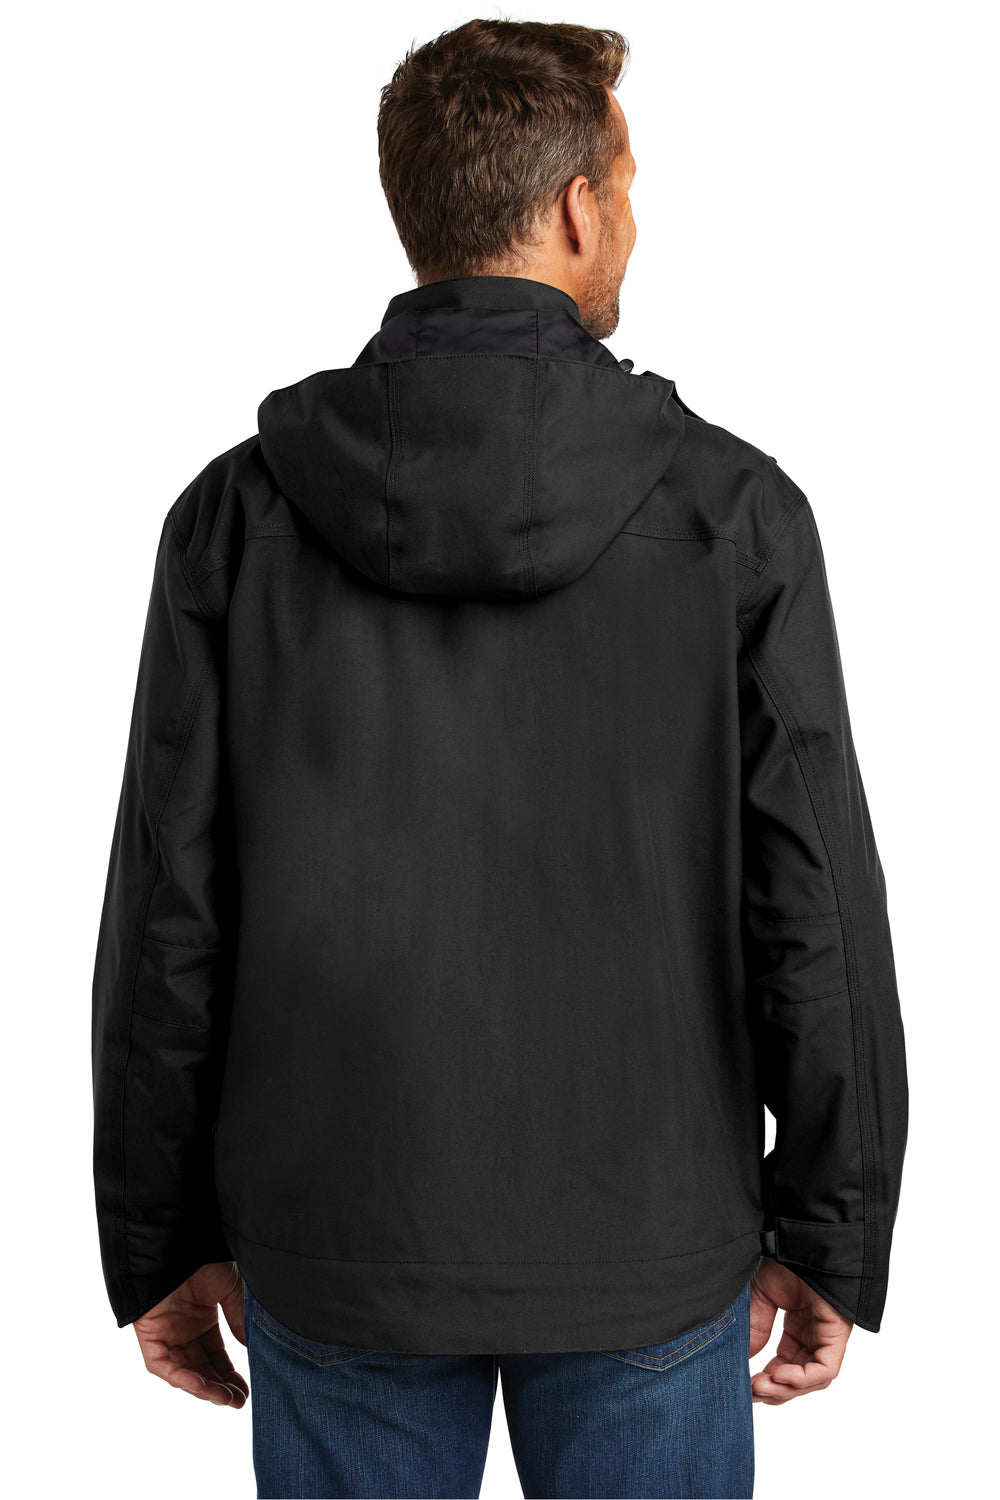 Carhartt CTJ162 Mens Shoreline Waterproof Full Zip Hooded Jacket Black Model Back